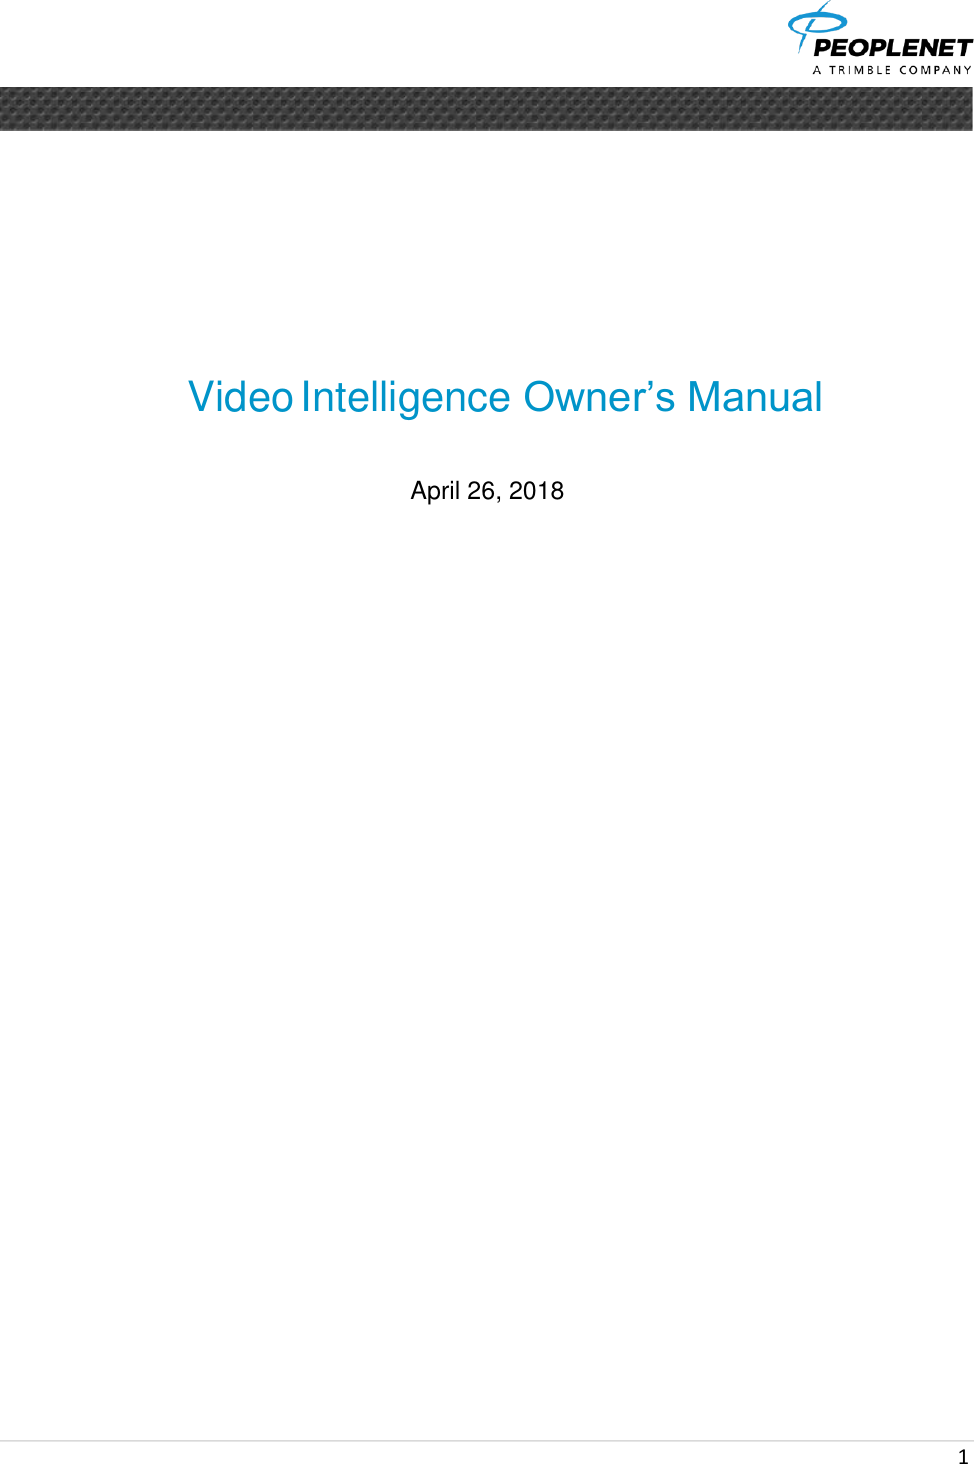  1             Video Intelligence Owner’s Manual   April 26, 2018  